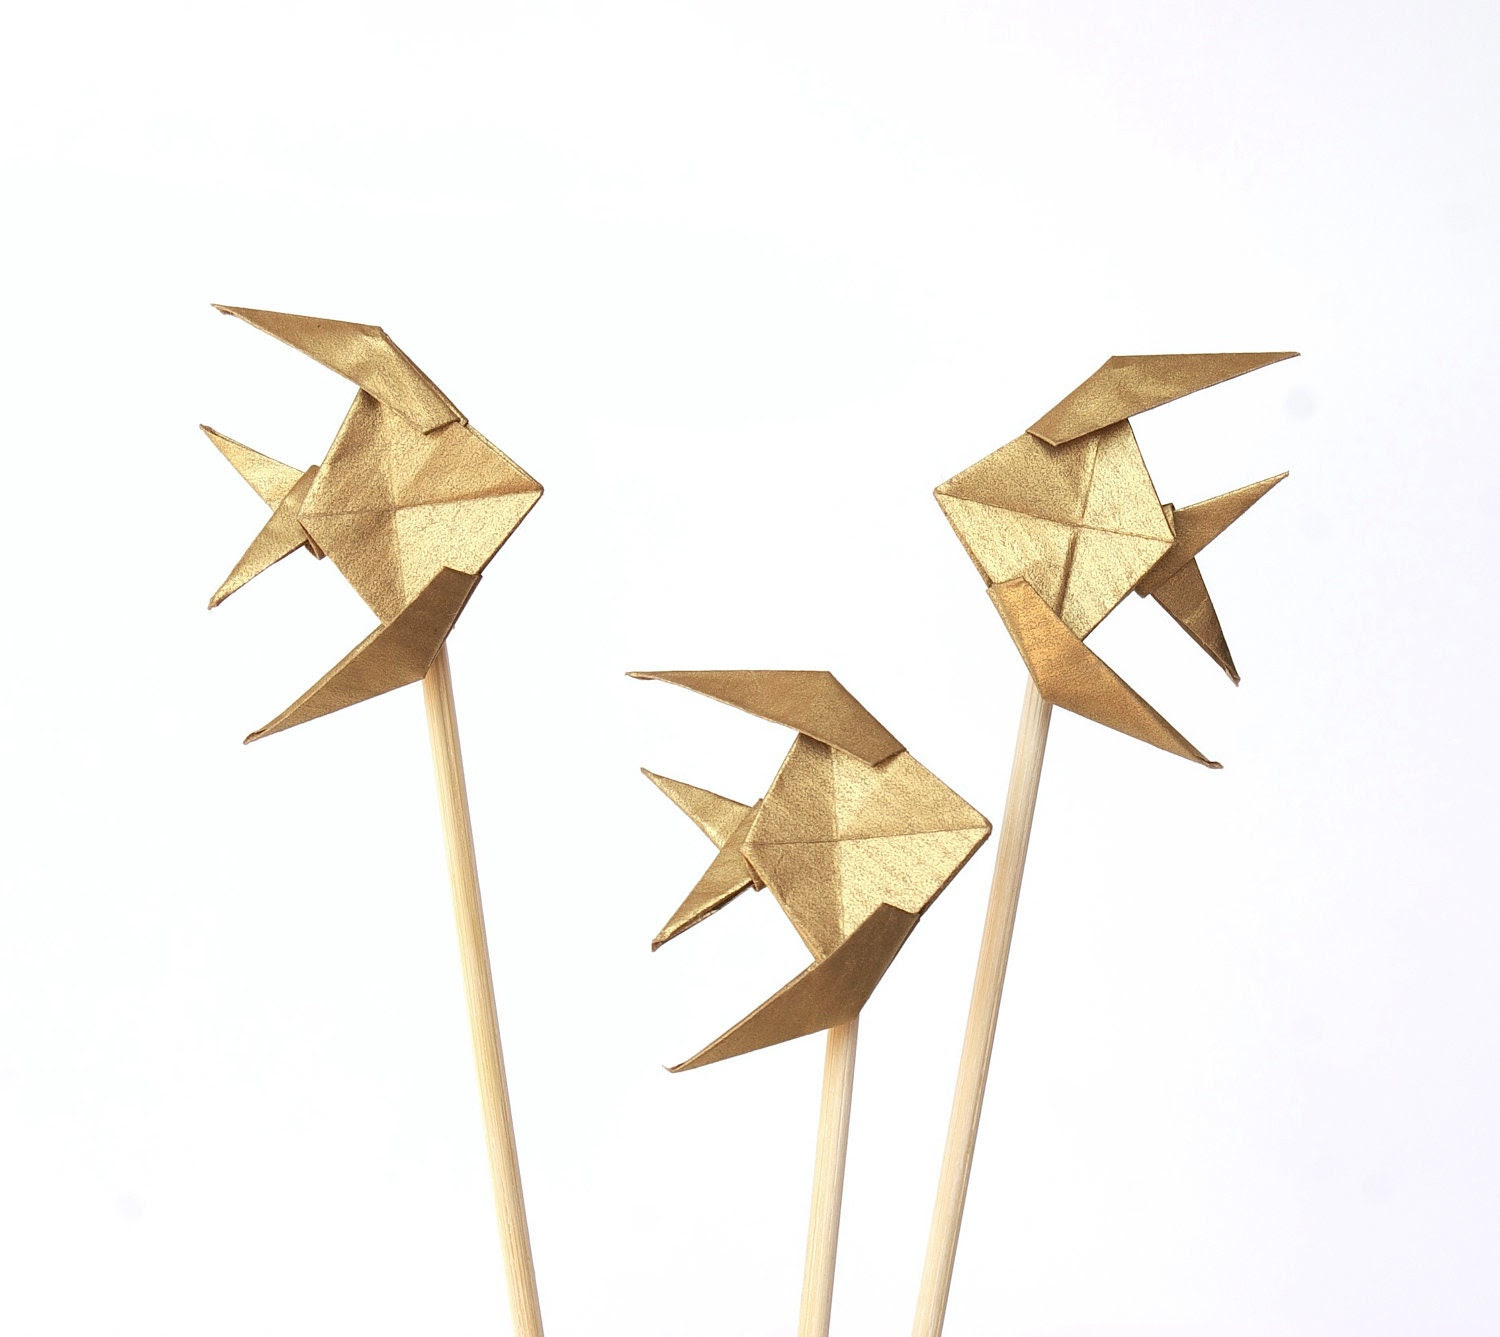 Gold origami fishes pin - MilleGrudicarta